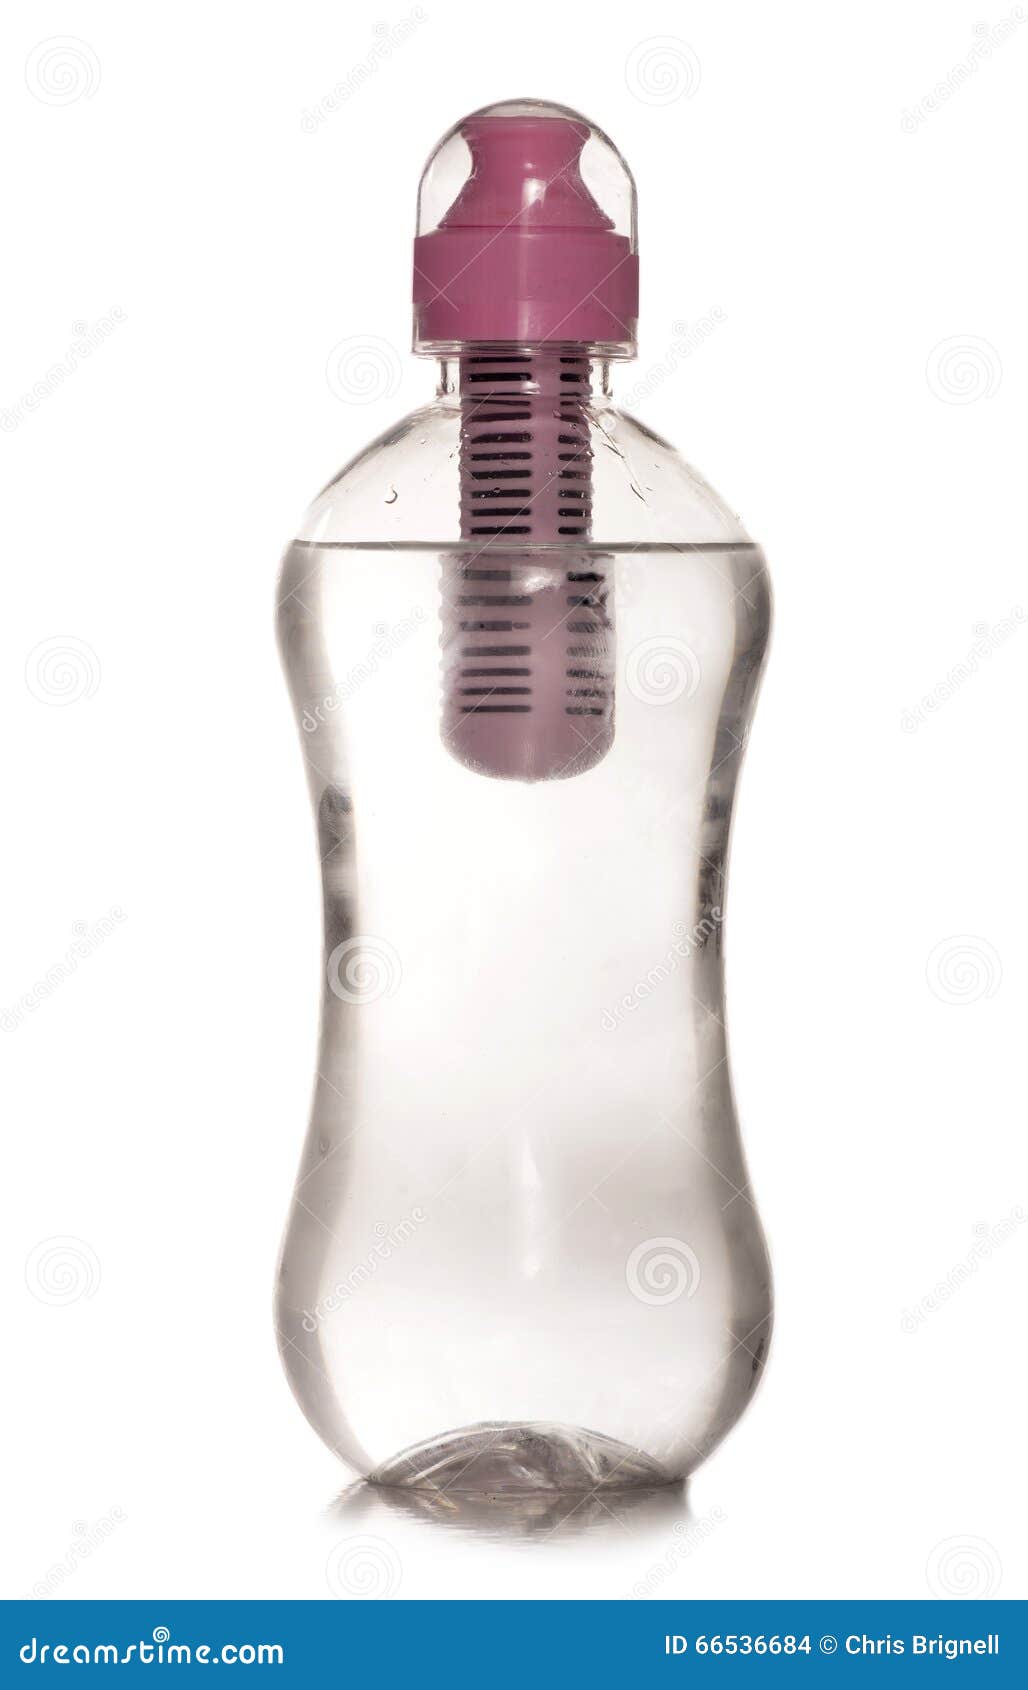 filtered water bottle